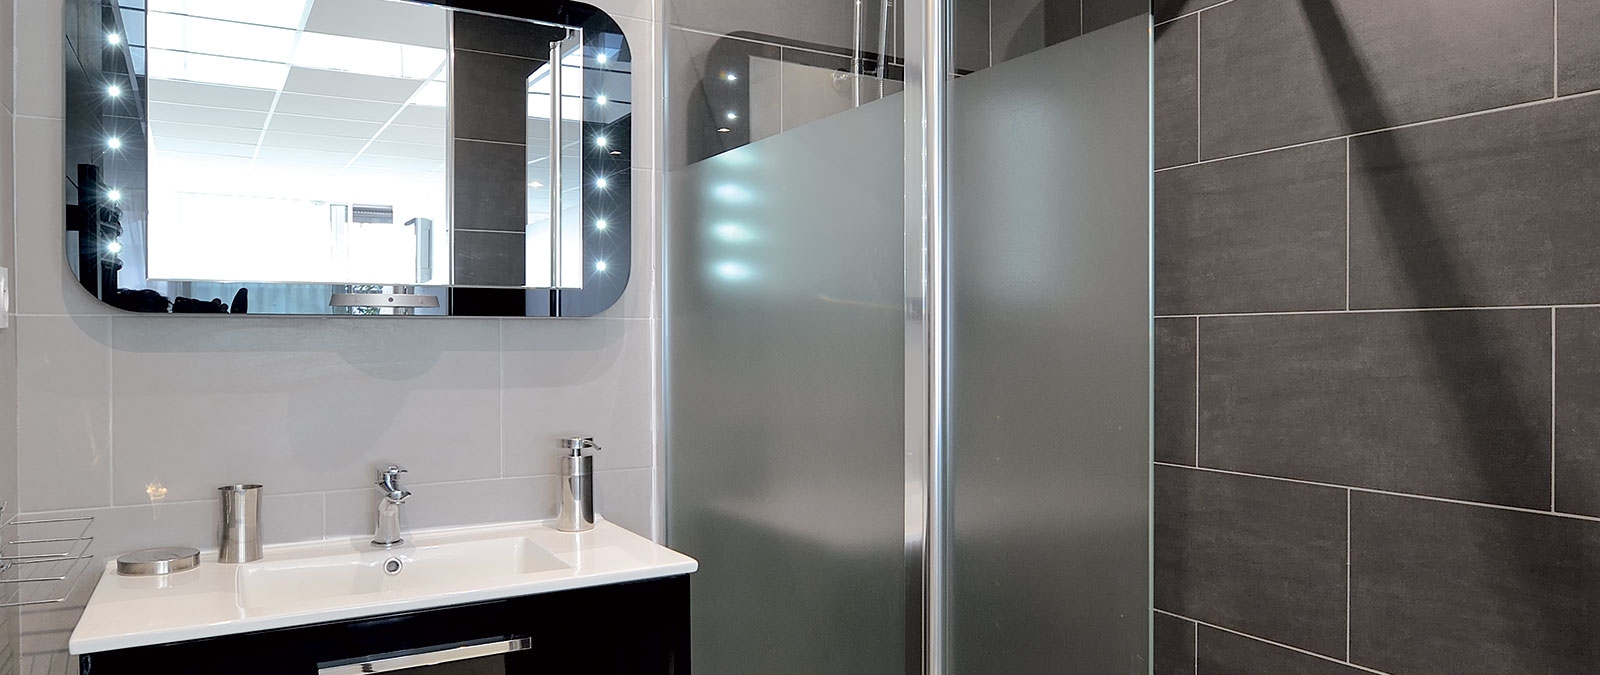 Chrome naturist studio flat for rent, bathroom with Italian-style shower